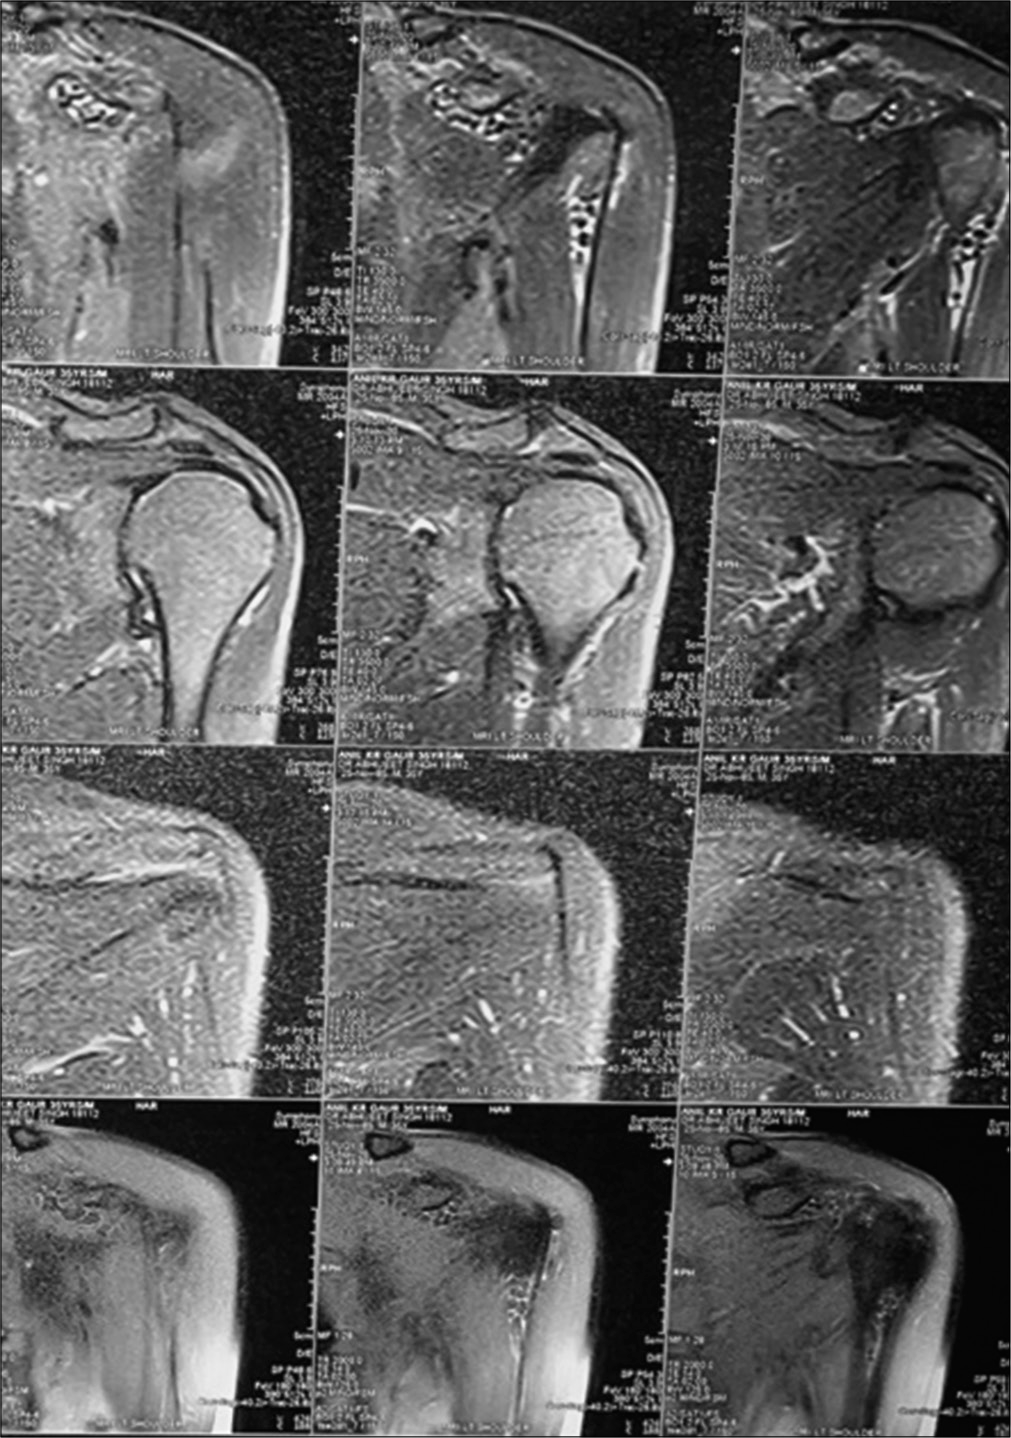 MRI of the left shoulder showing multiple loose bodies.